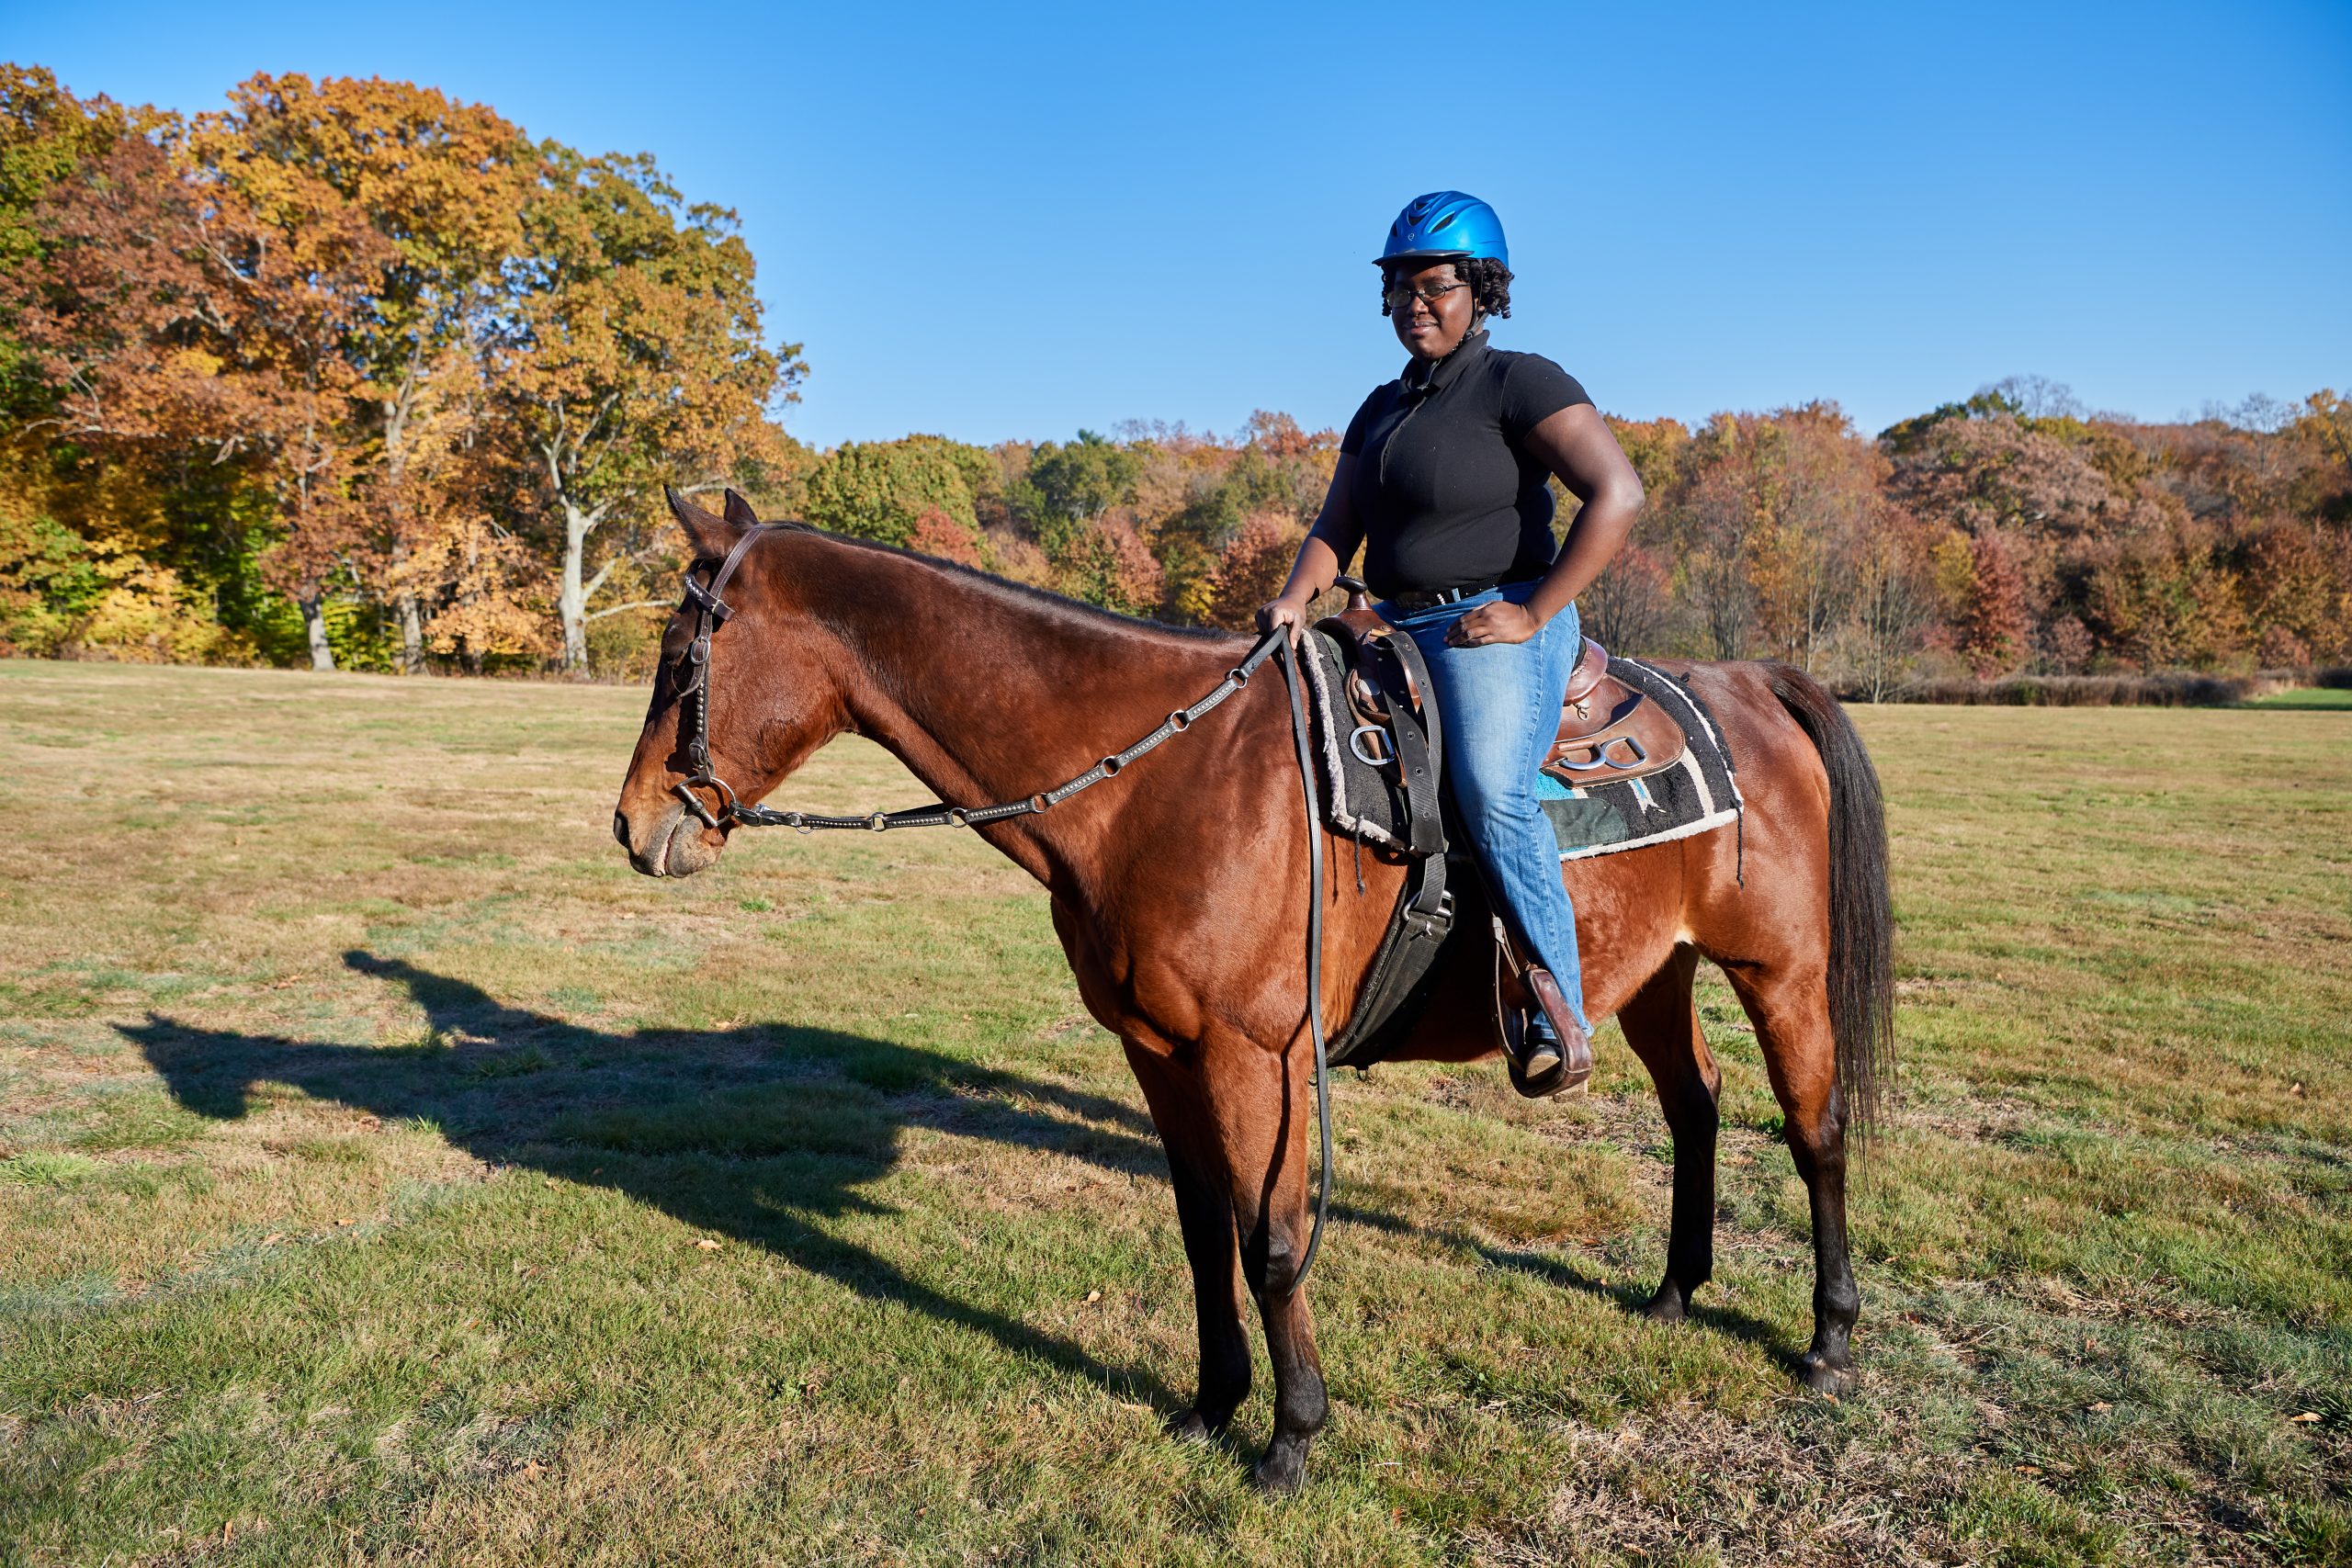 LaShawnda and her horse, Handsome